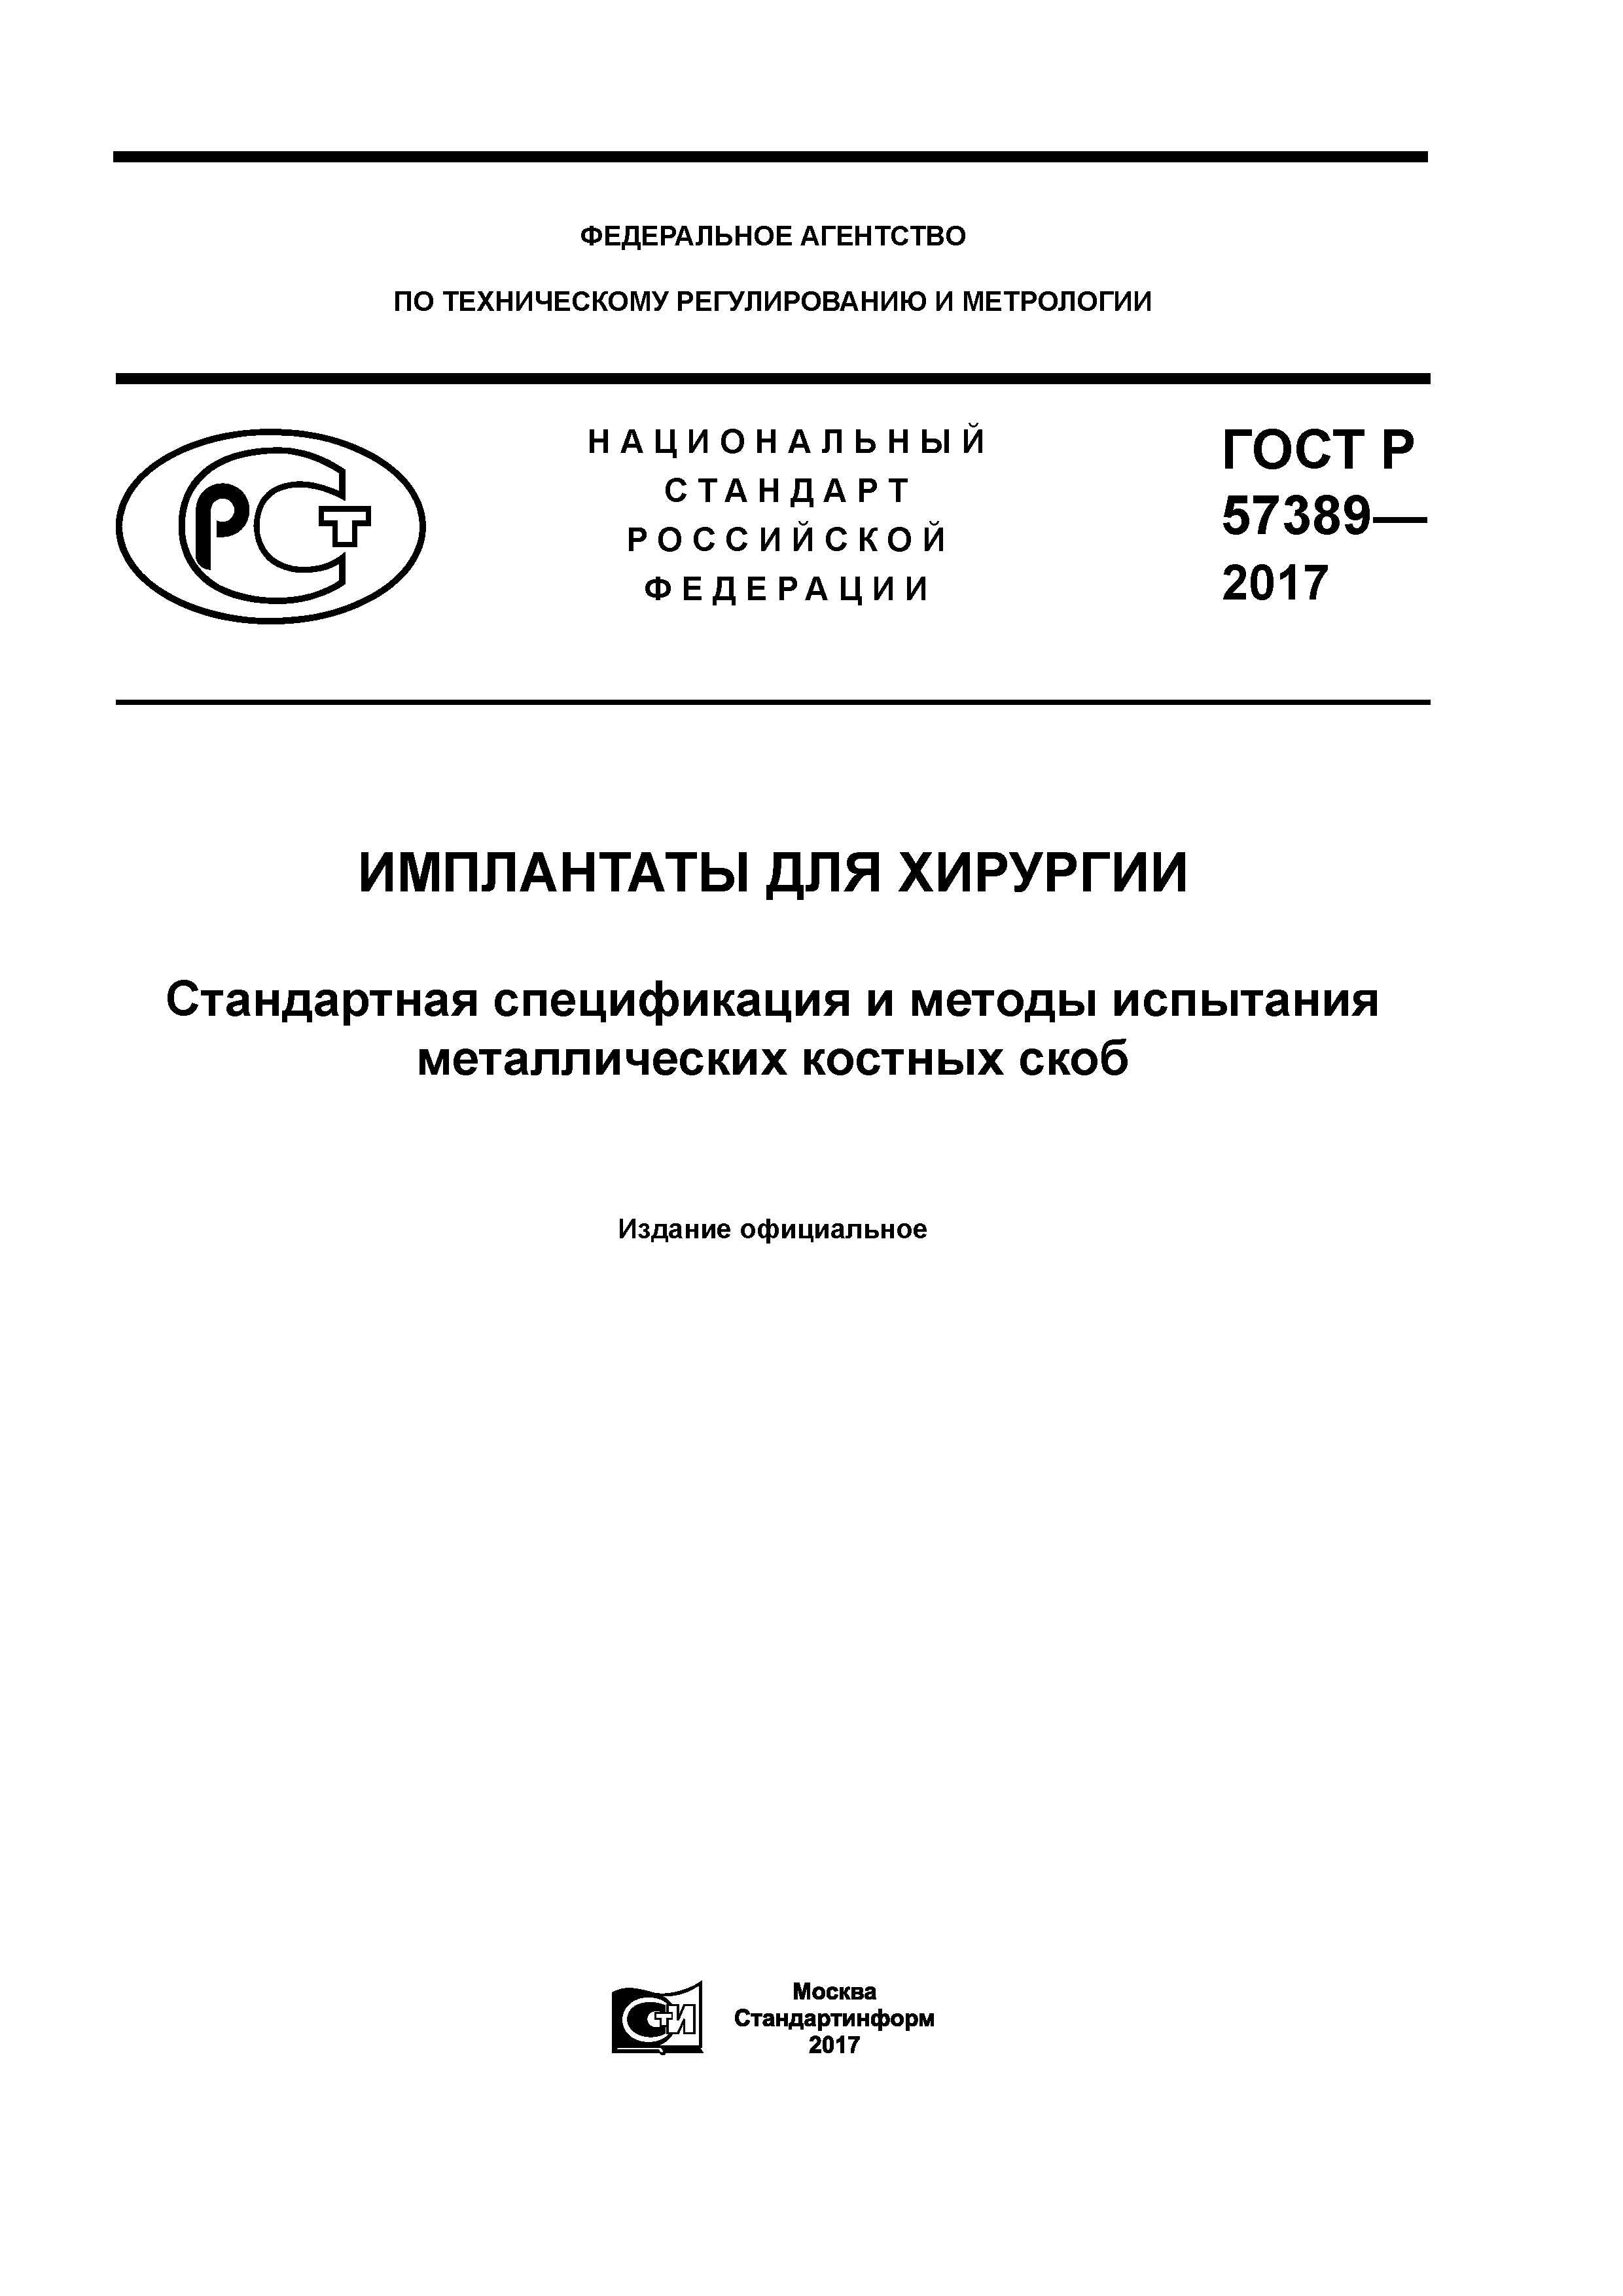 ГОСТ Р 57389-2017